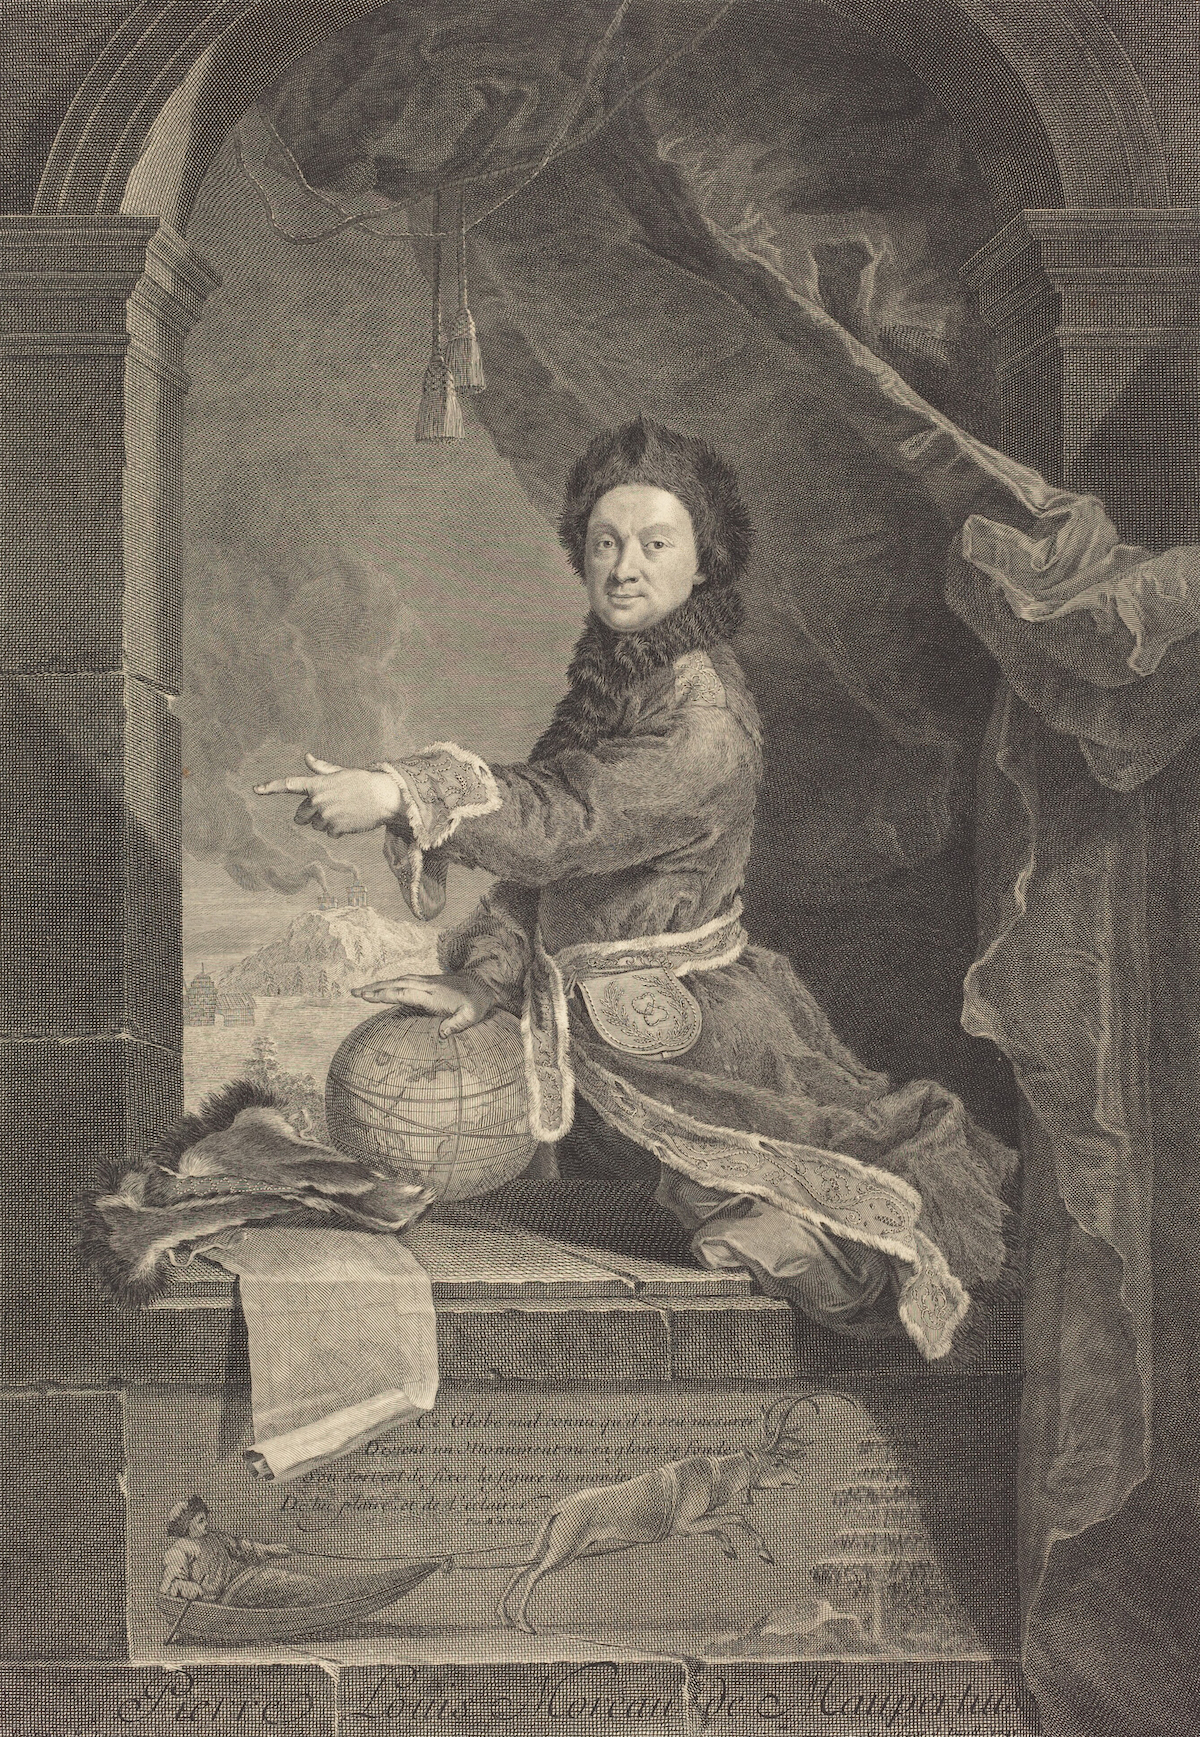 Pierre Maupertuis, by Jean Daullé, 1741. National Gallery of Art, Washington, D.C.